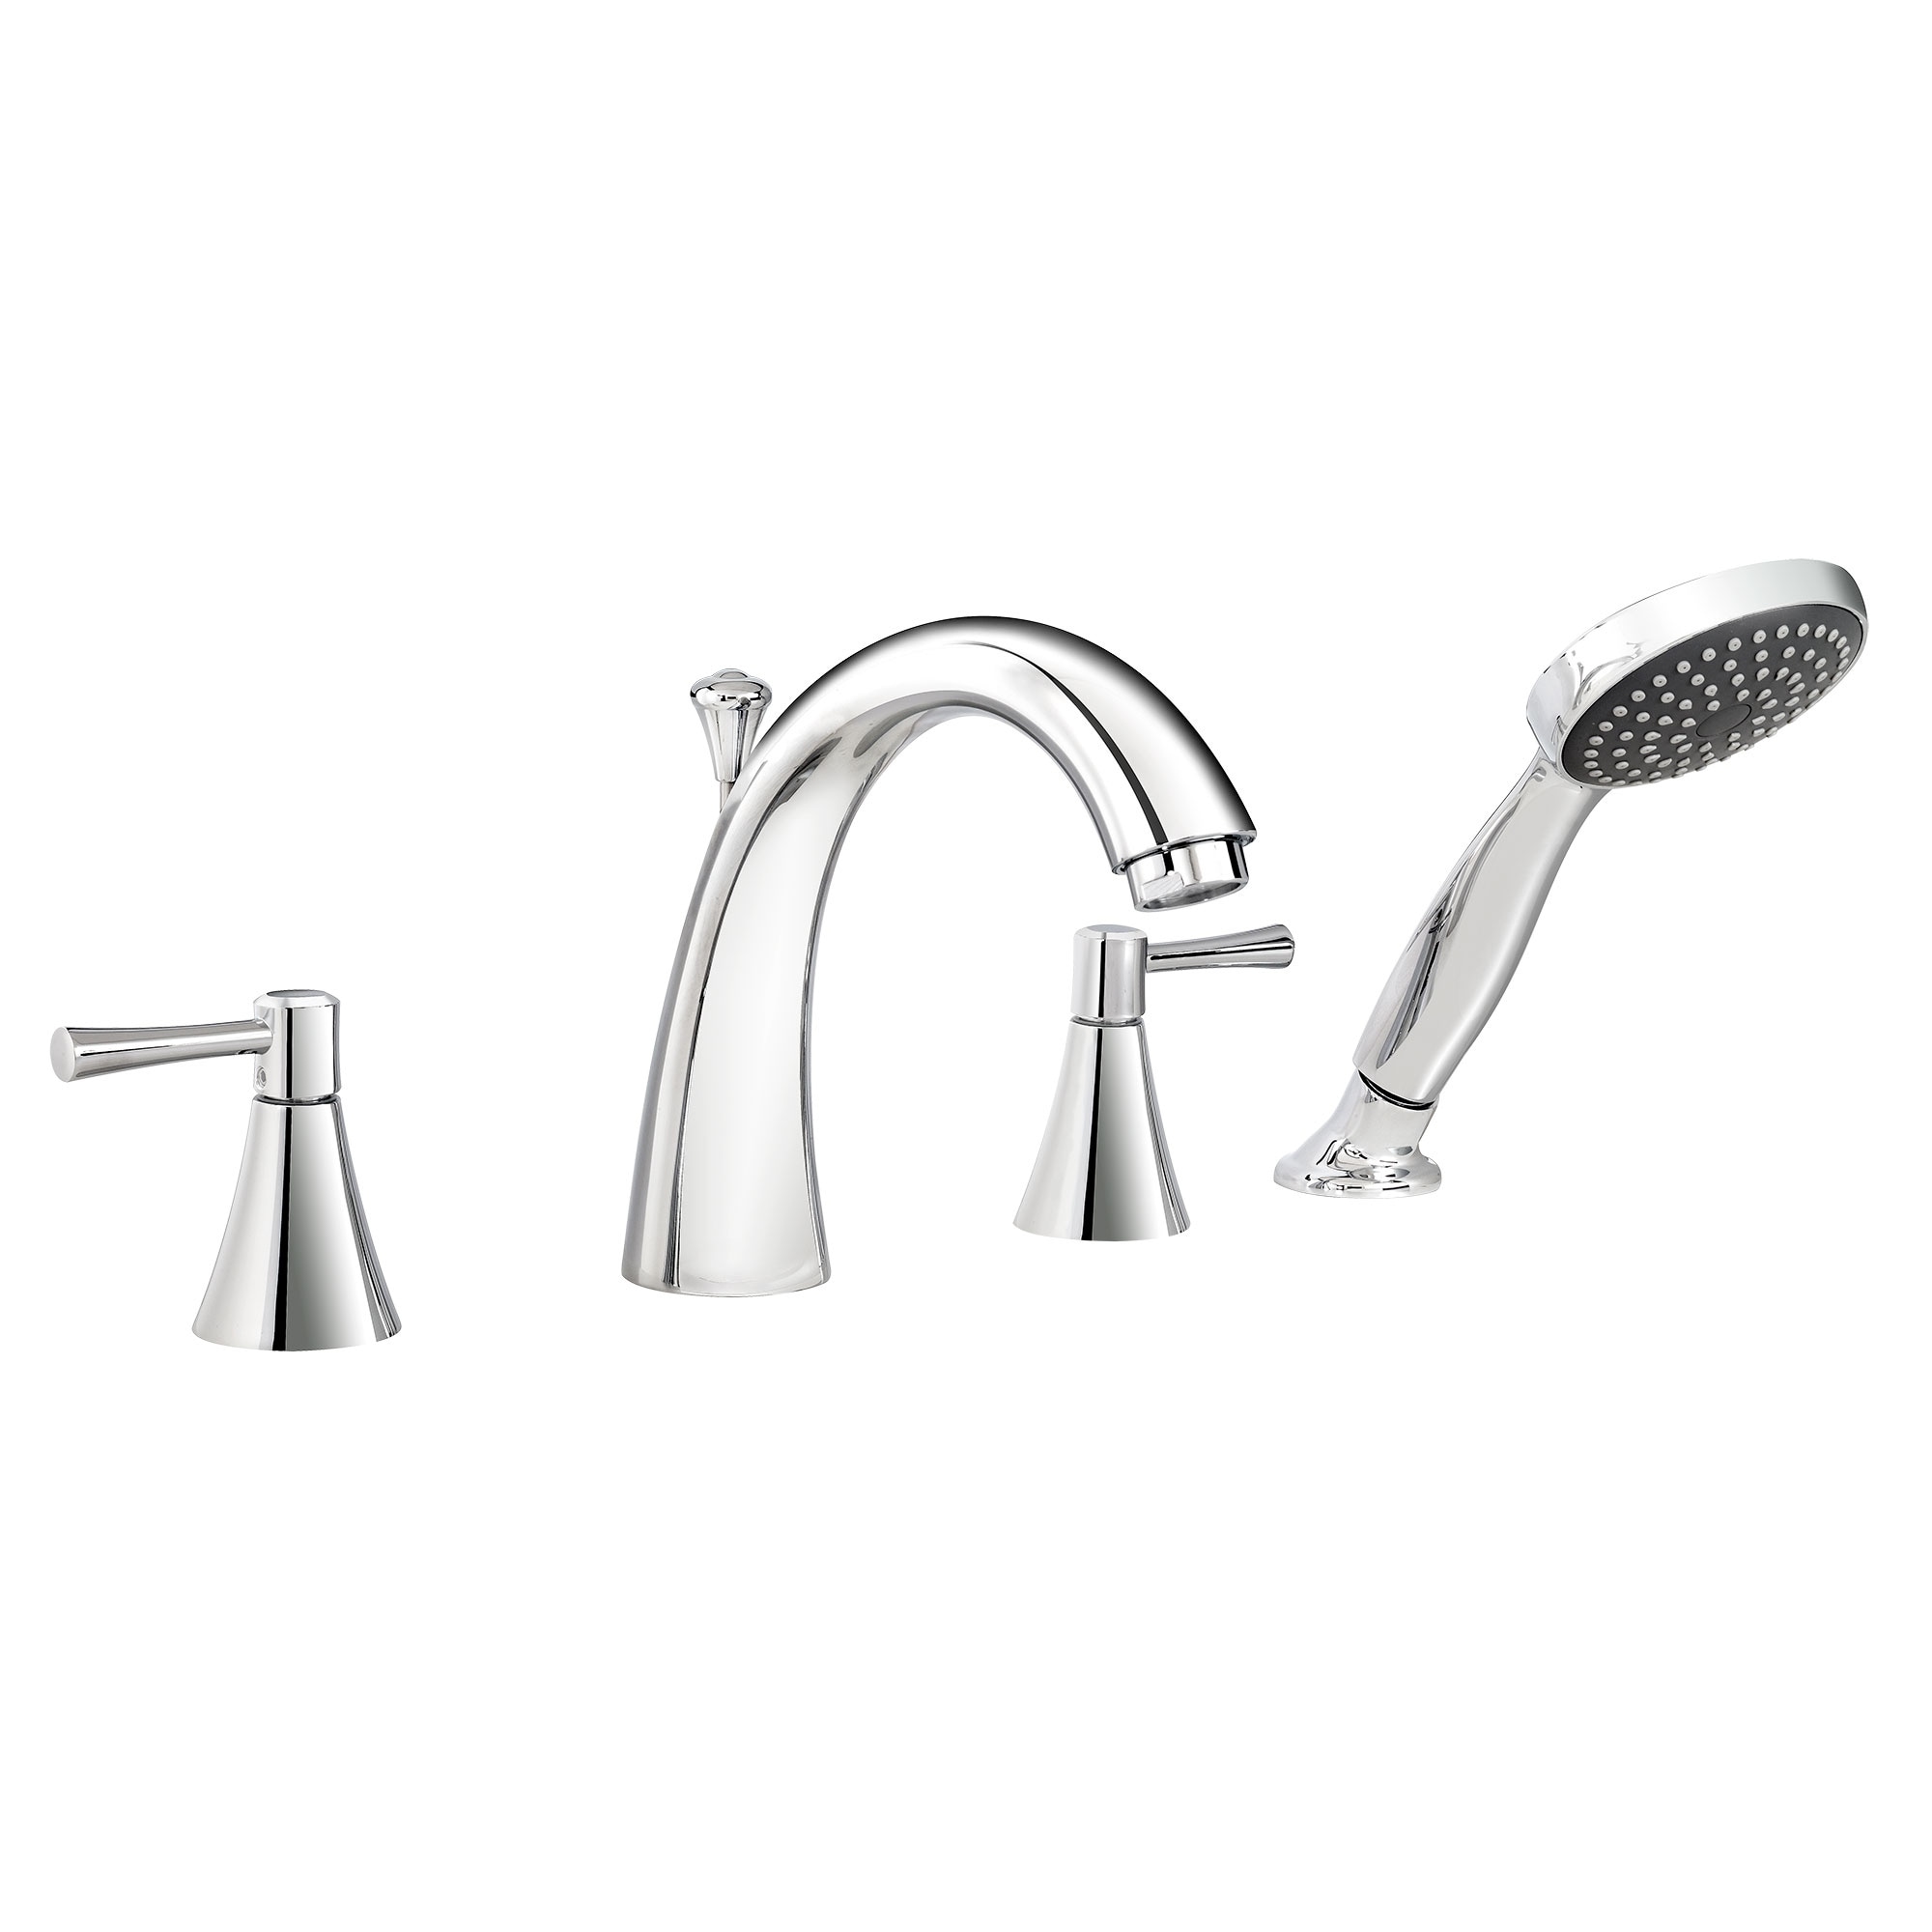 Shop Belanger Neo44ccp Roman Tub Faucet With Handheld Shower